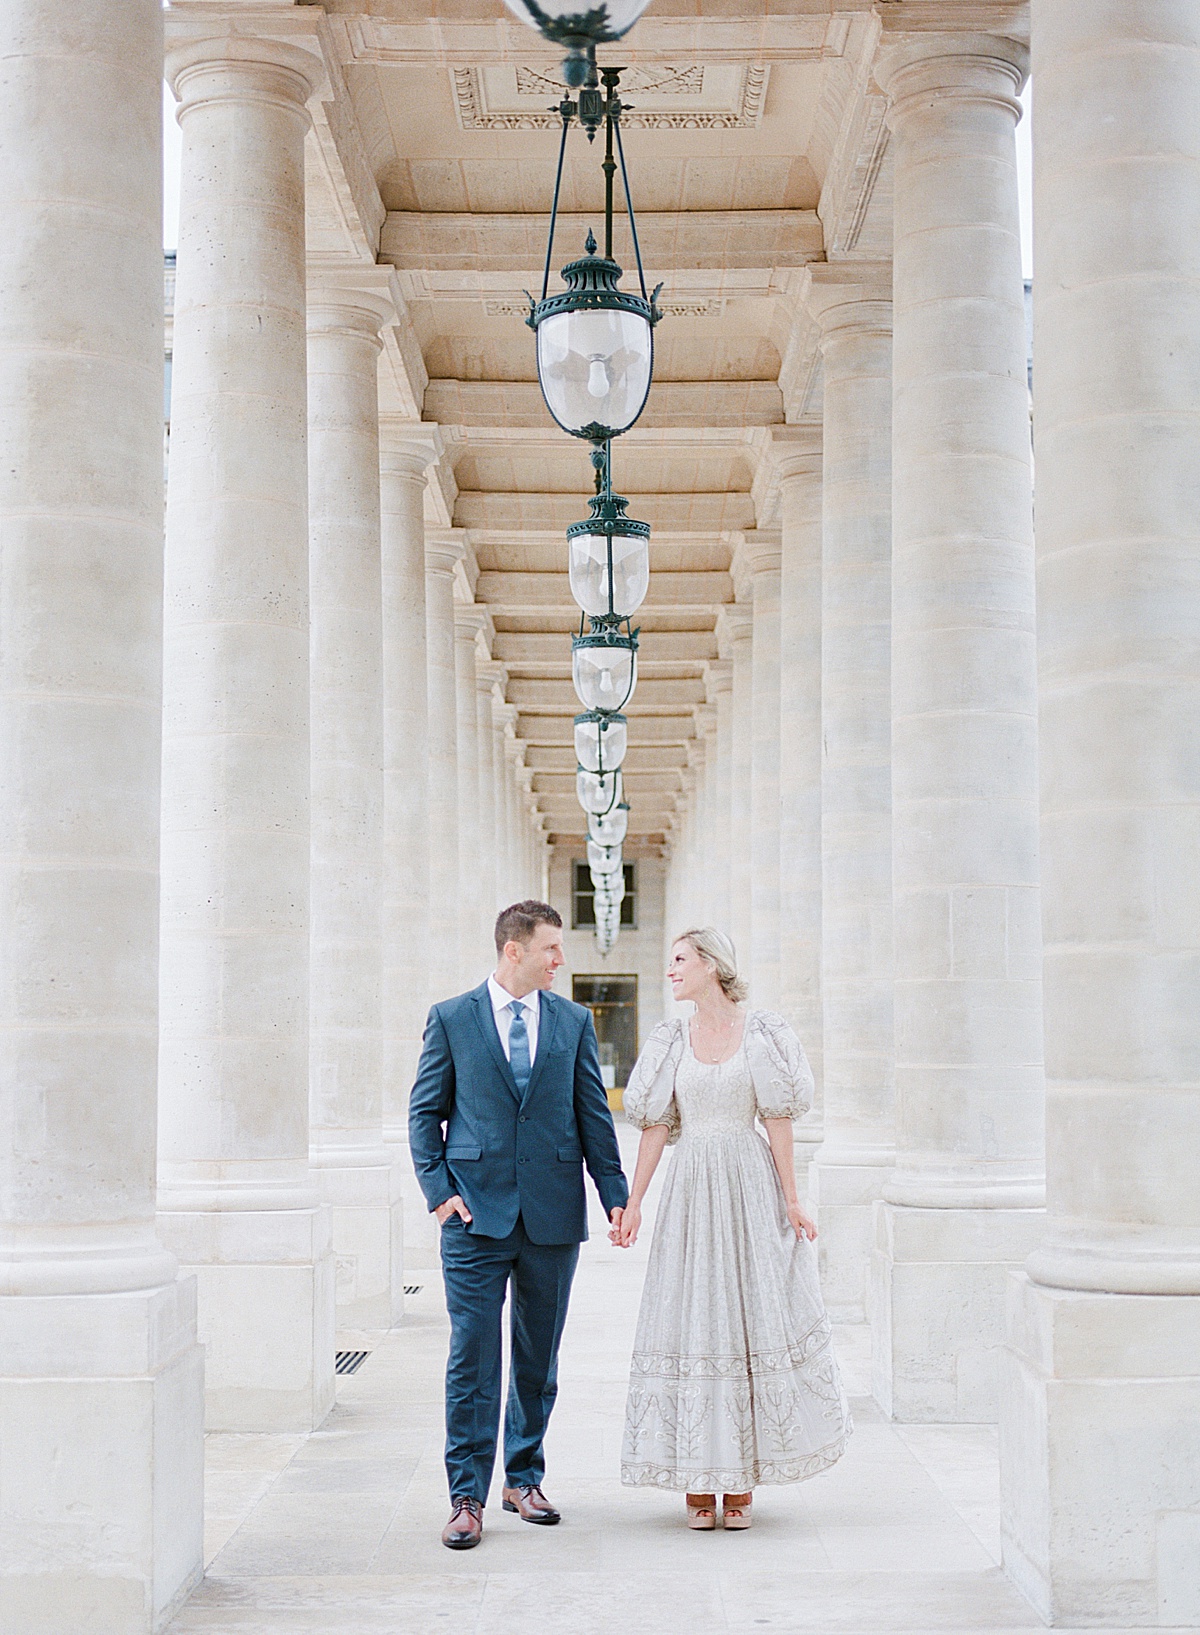 Palais Royal Engagement Couple holding hands walking through columns Photo